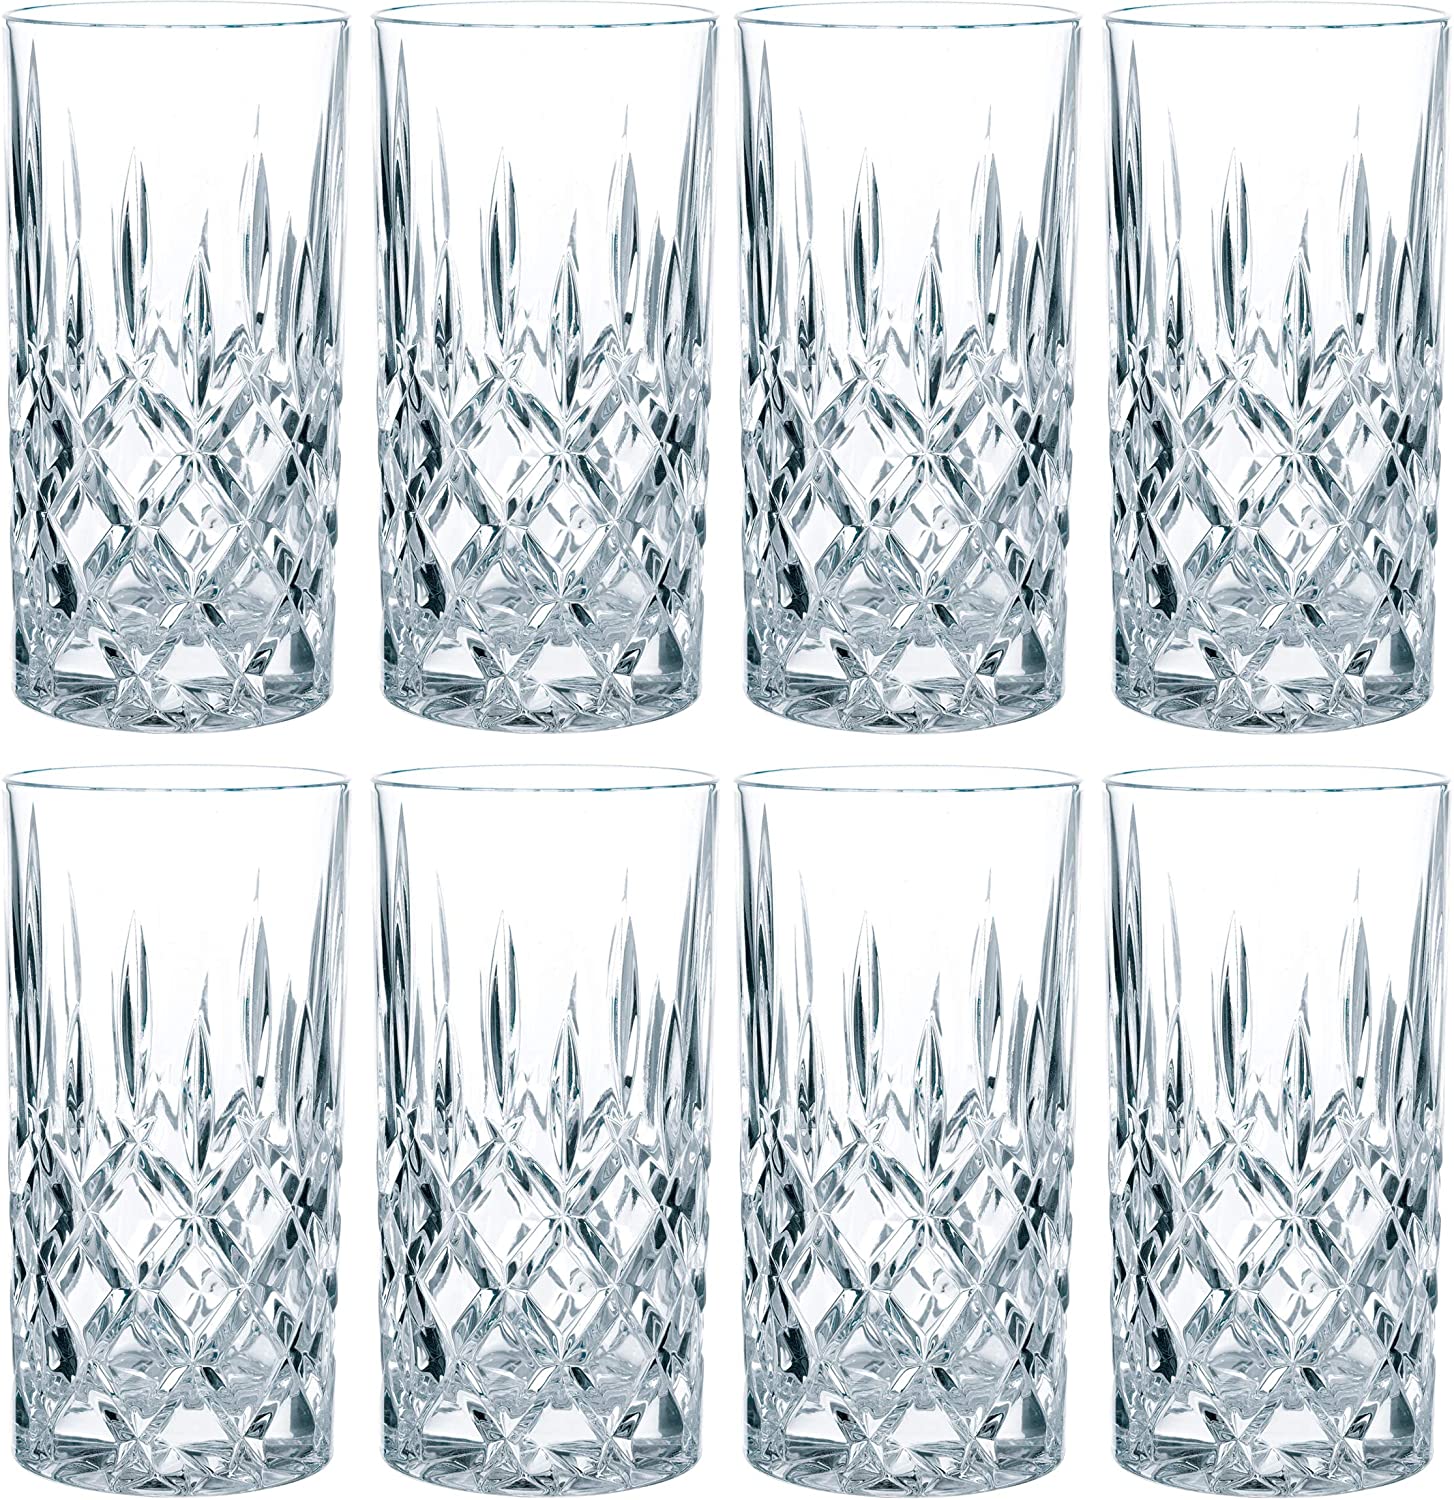 Spiegelau & Nachtmann Nachtmann Noblesse Long Drink Glasses, Set of 8, Water Glass, Juice Glass, Crystal Glass, Height 14.8 cm, 375 ml